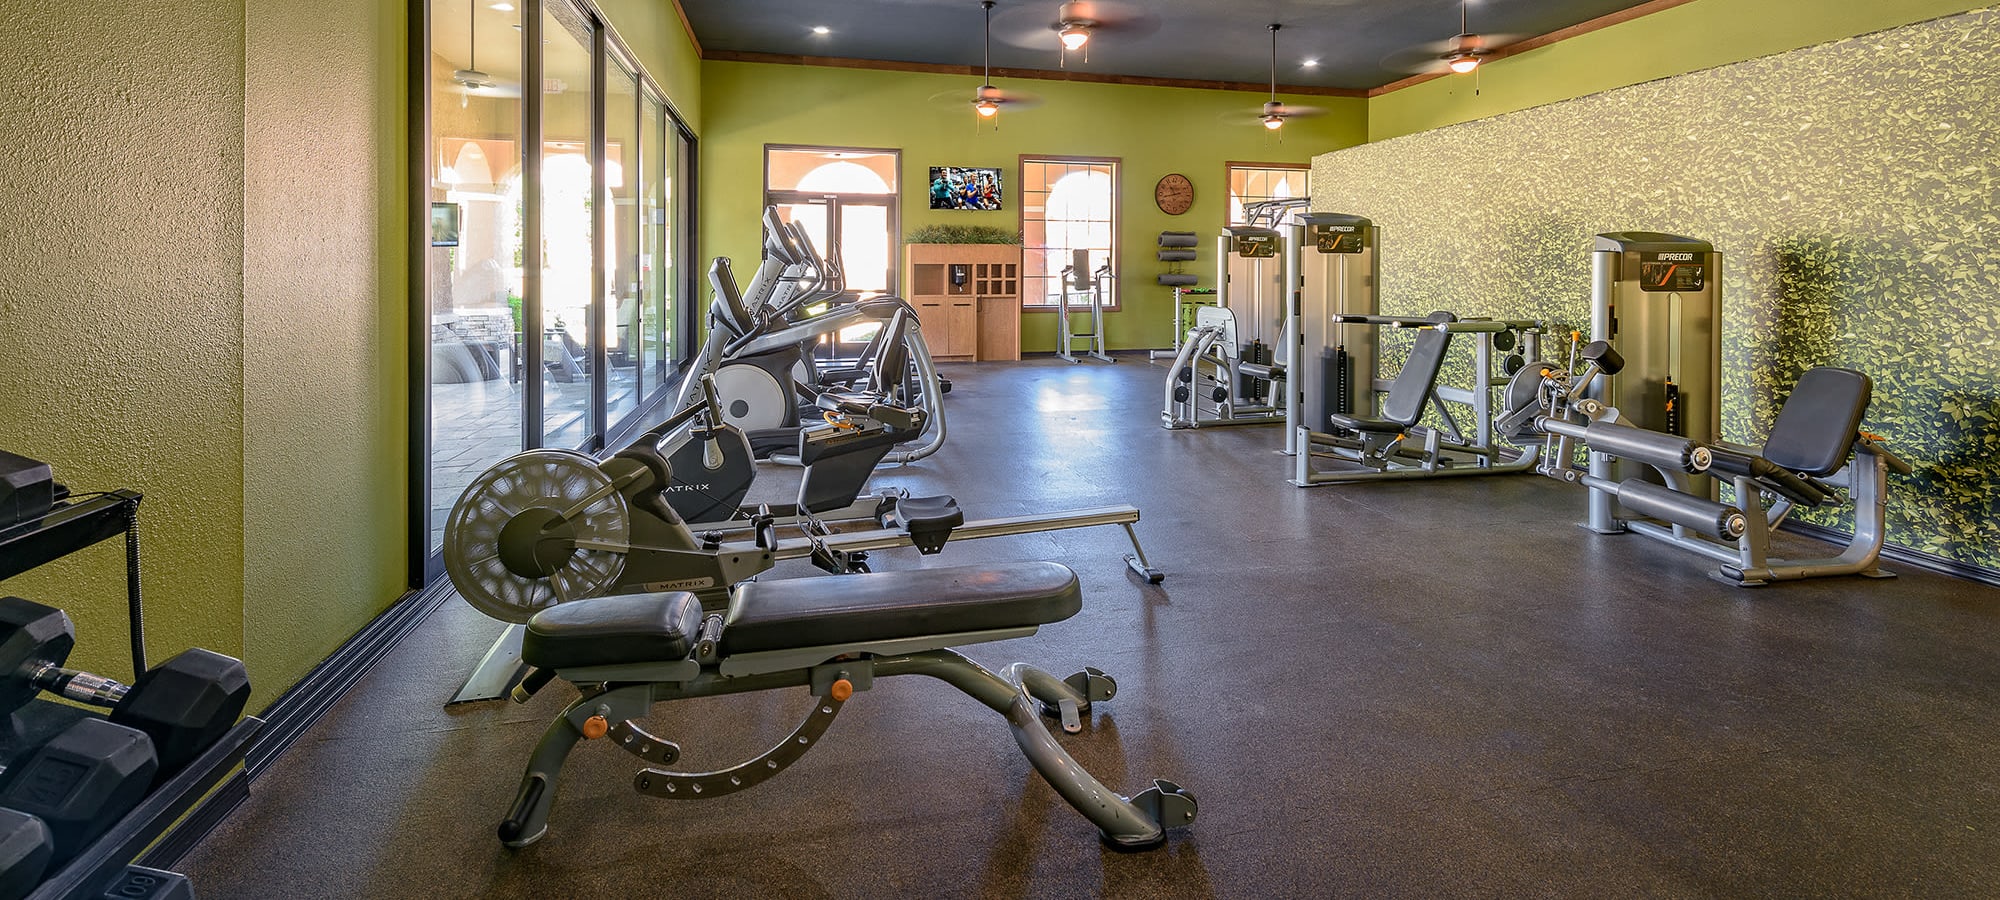 Fitness Center at Stone Oaks in Chandler, Arizona